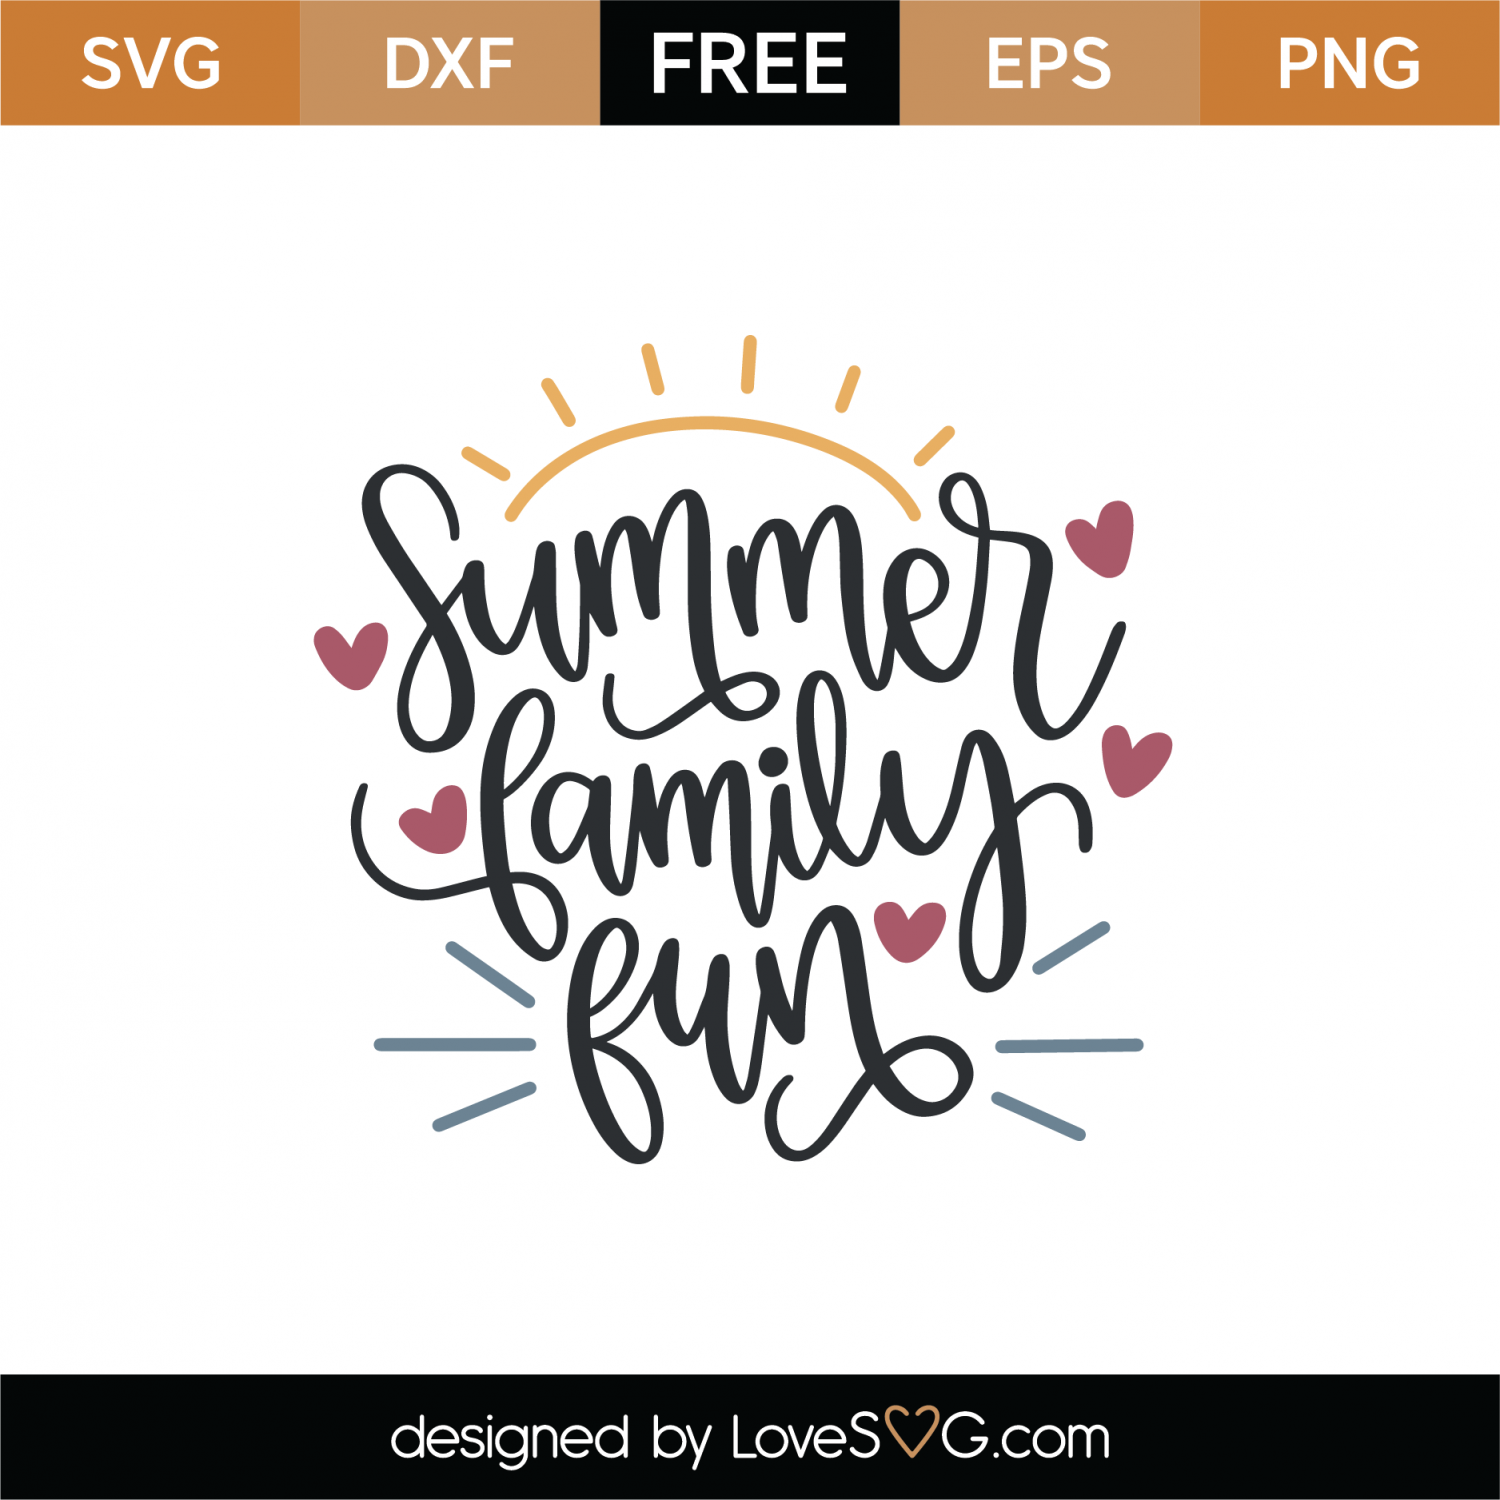 Download Free Summer Family Fun SVG Cut File | Lovesvg.com